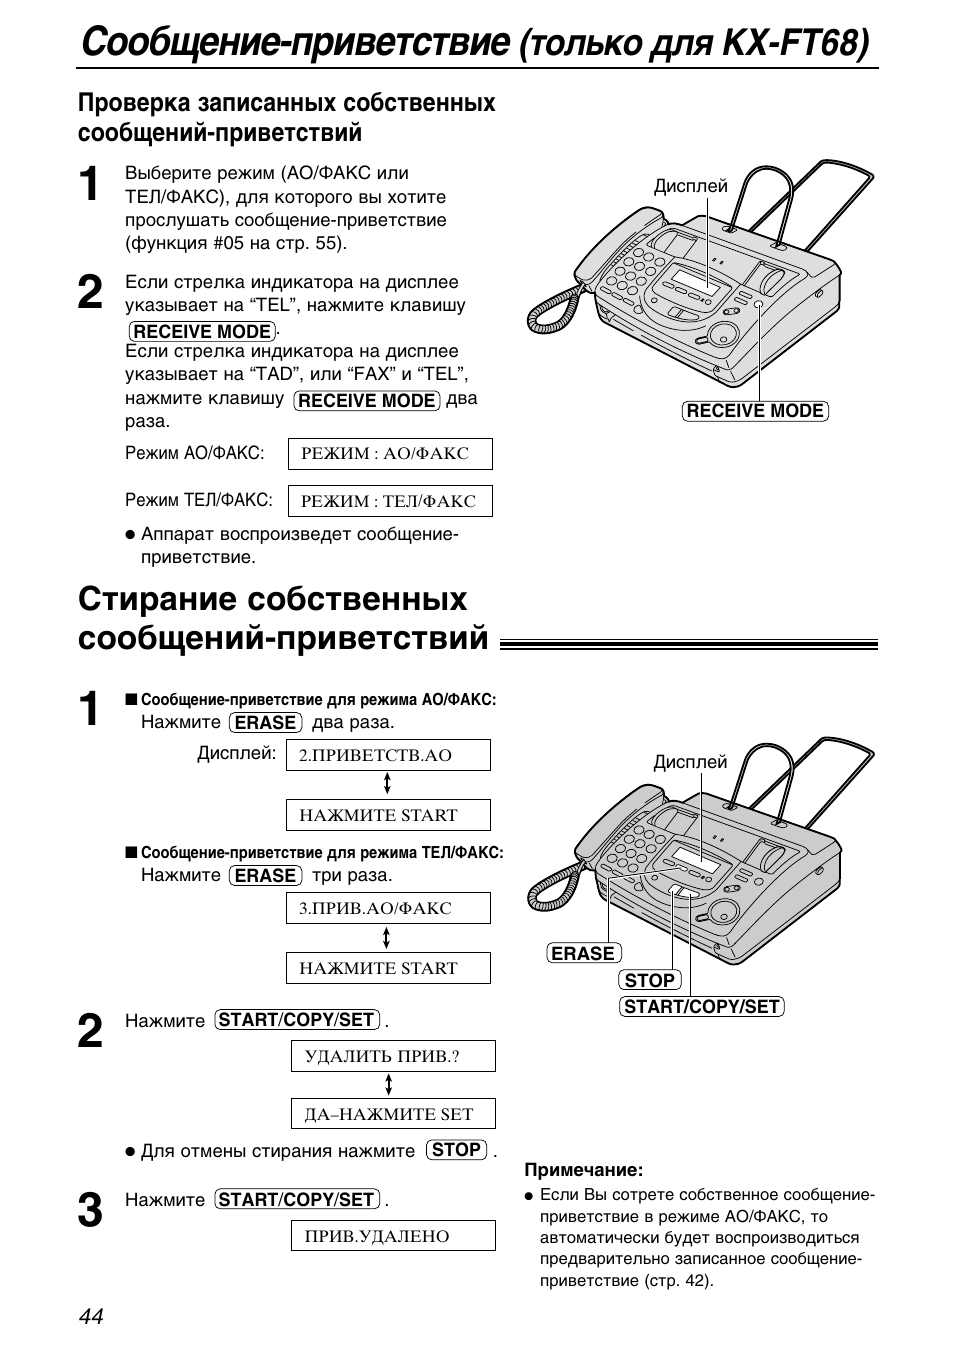 Инструкция по эксплуатации факса panasonic kx ft68